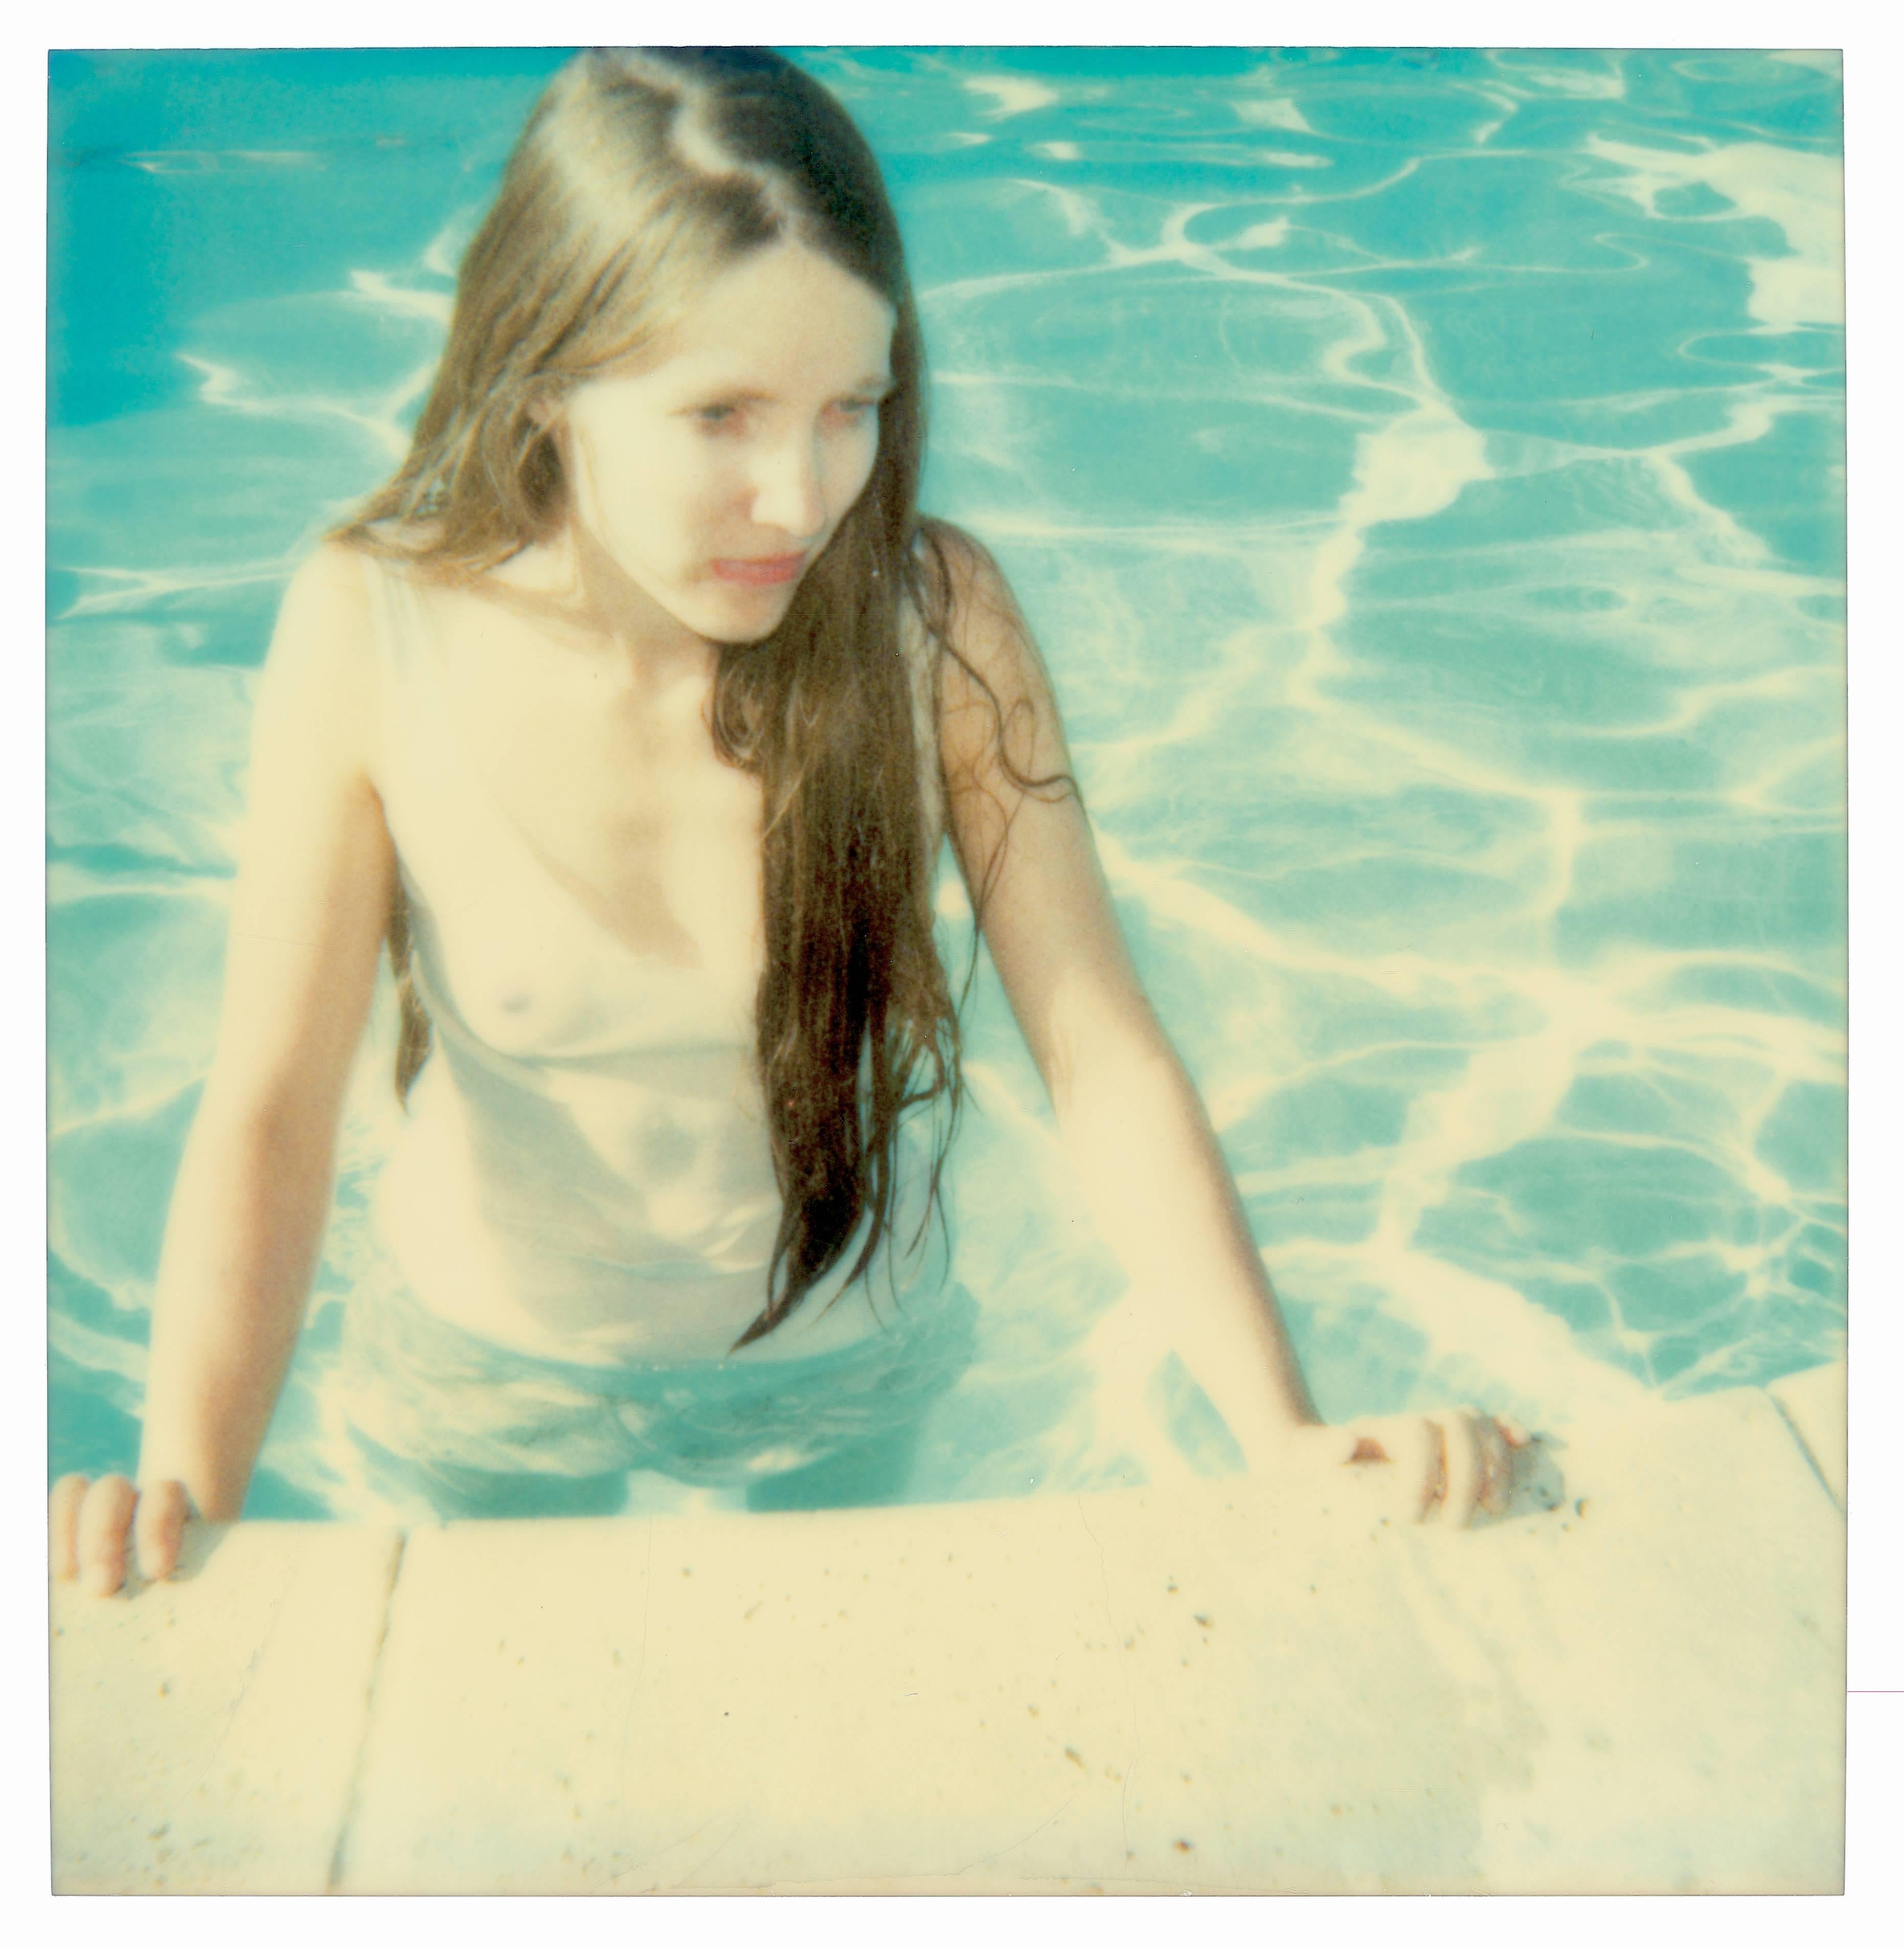 Stefanie Schneider Color Photograph - Pool Side - 29 Palms, CA - 58x56cm, analog C-Print, hand-printed by the artist